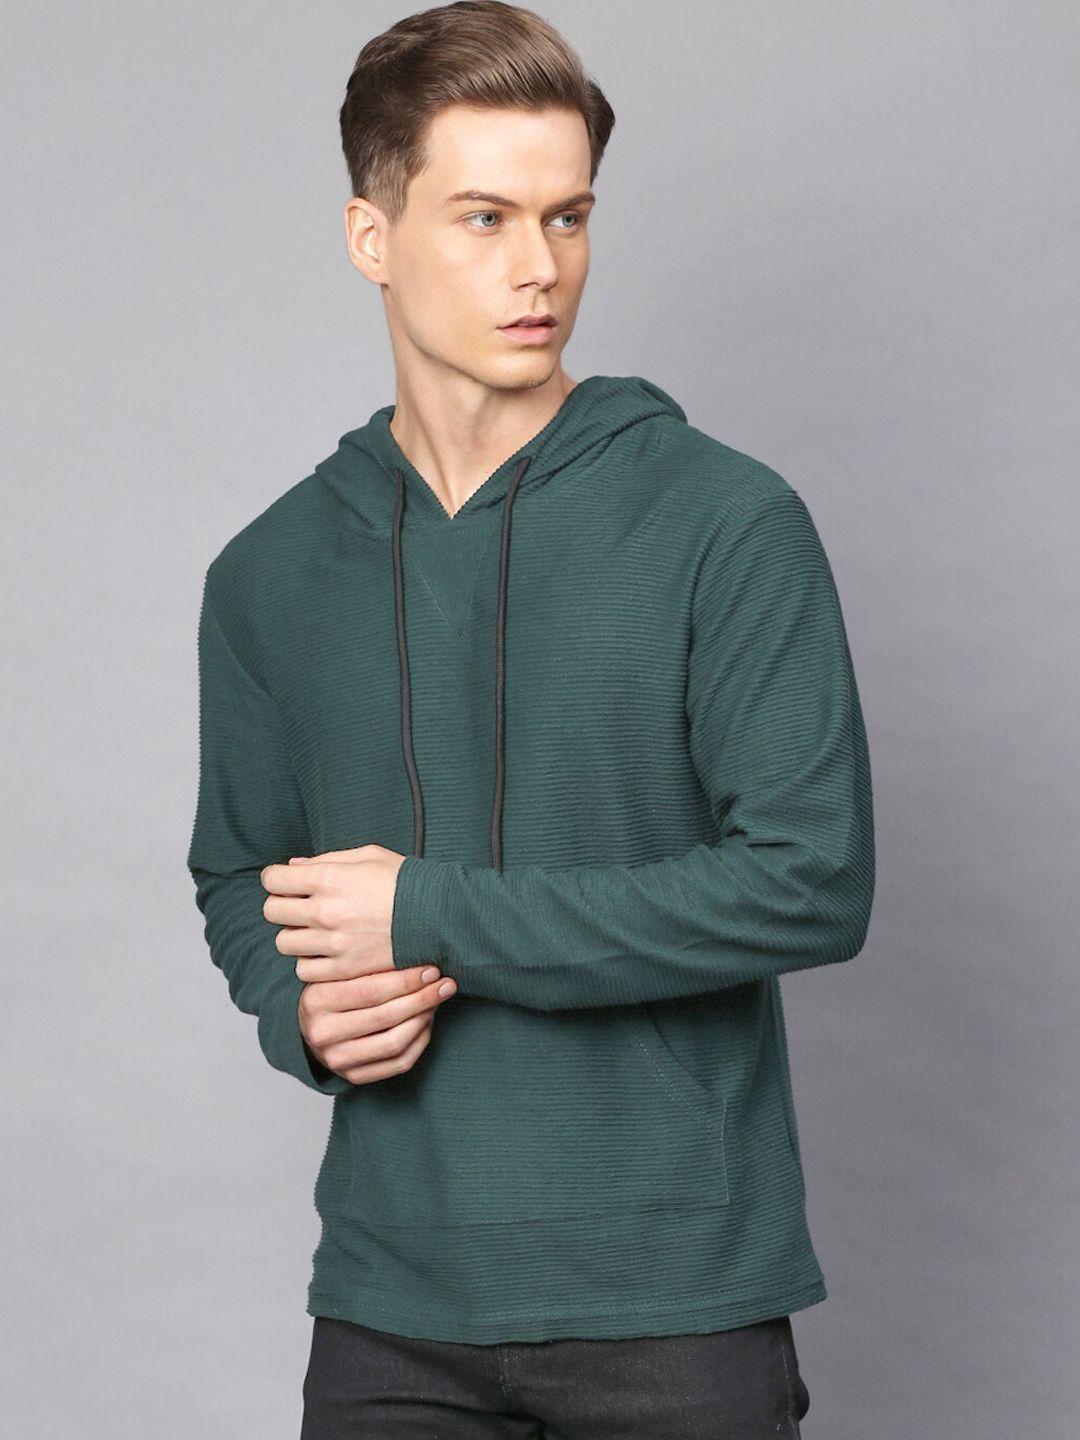 campus-sutra-men-green-hooded-sweatshirt